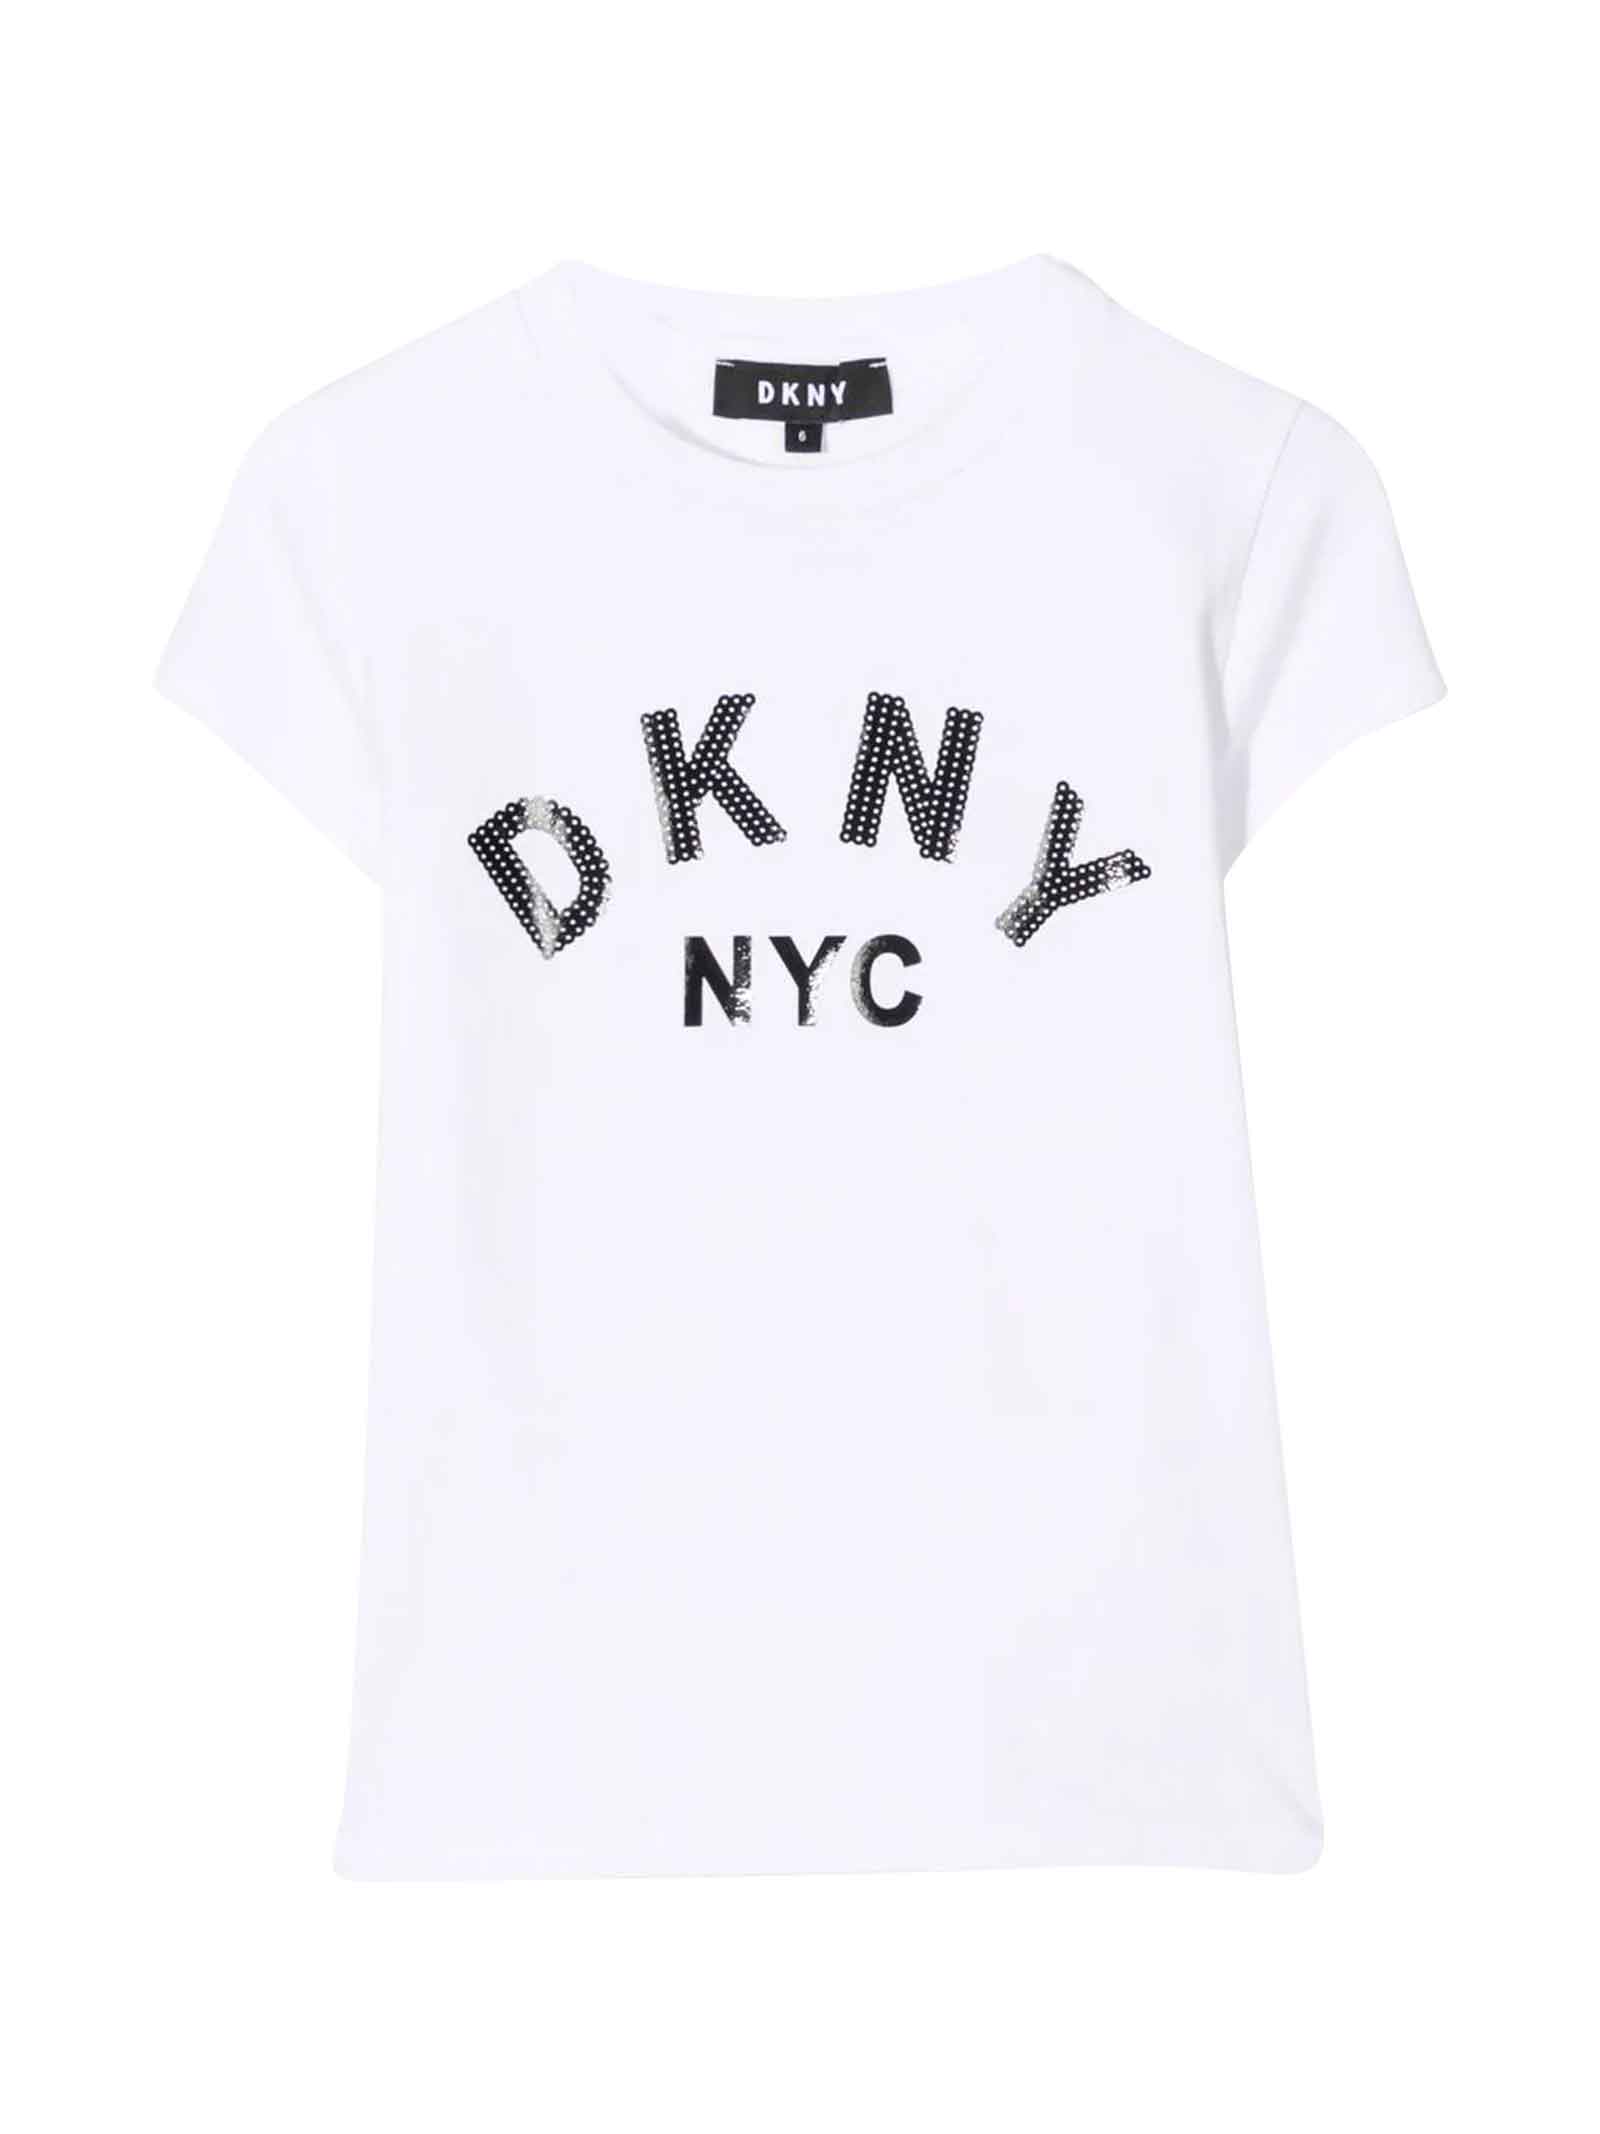 DKNY Unisex White T-shirt